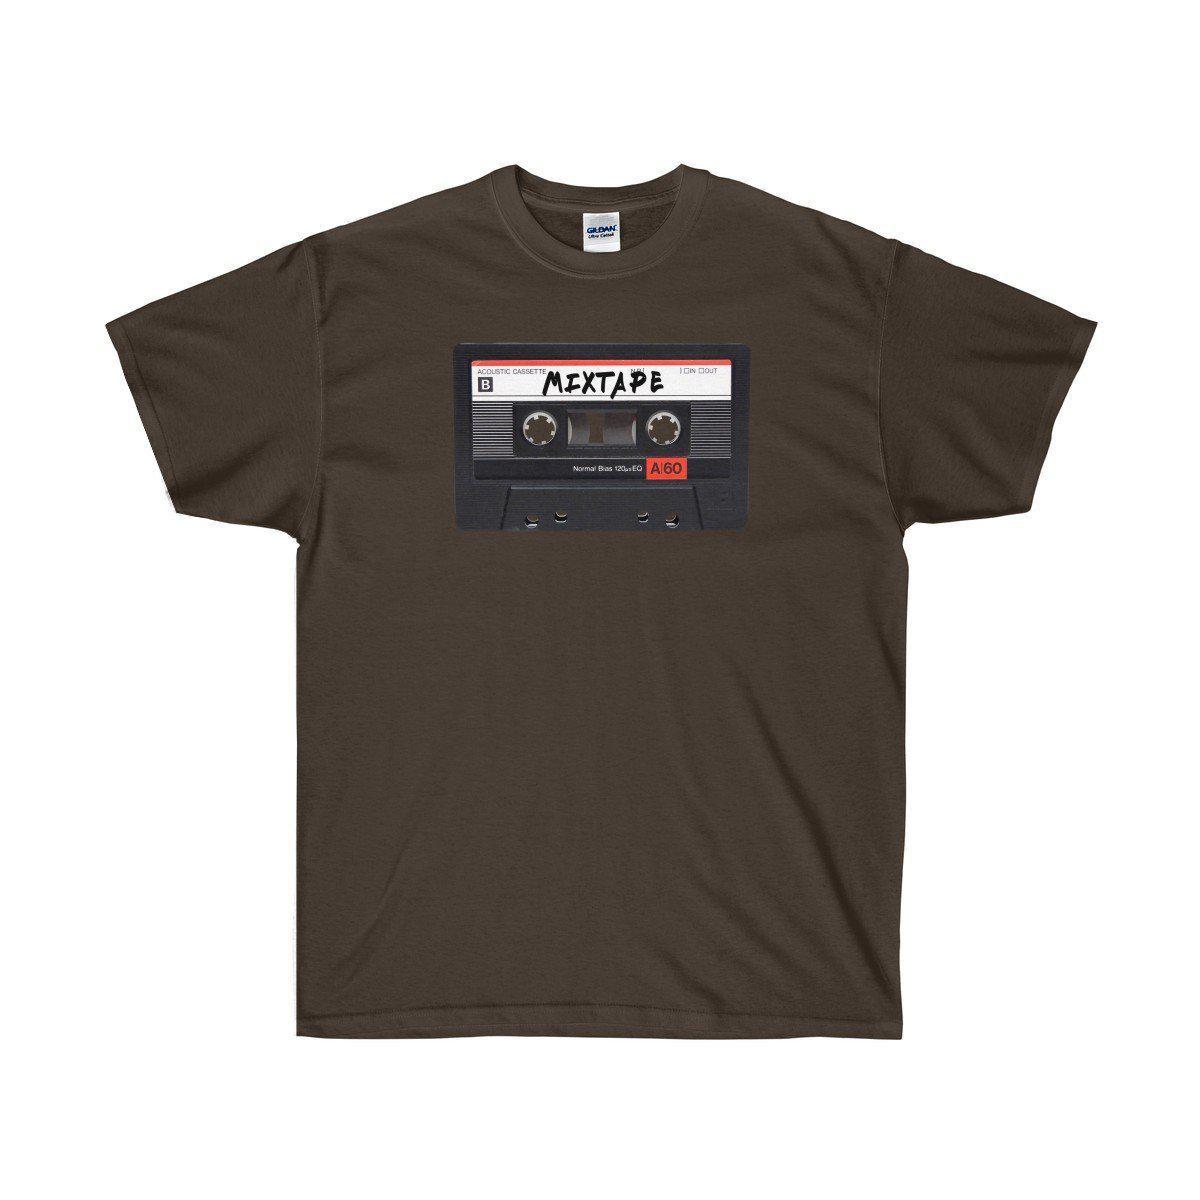 Mixtape Ultra Cotton Tee Shirt - 90's Retro Hip Hop tee-Dark Chocolate-S-Archethype